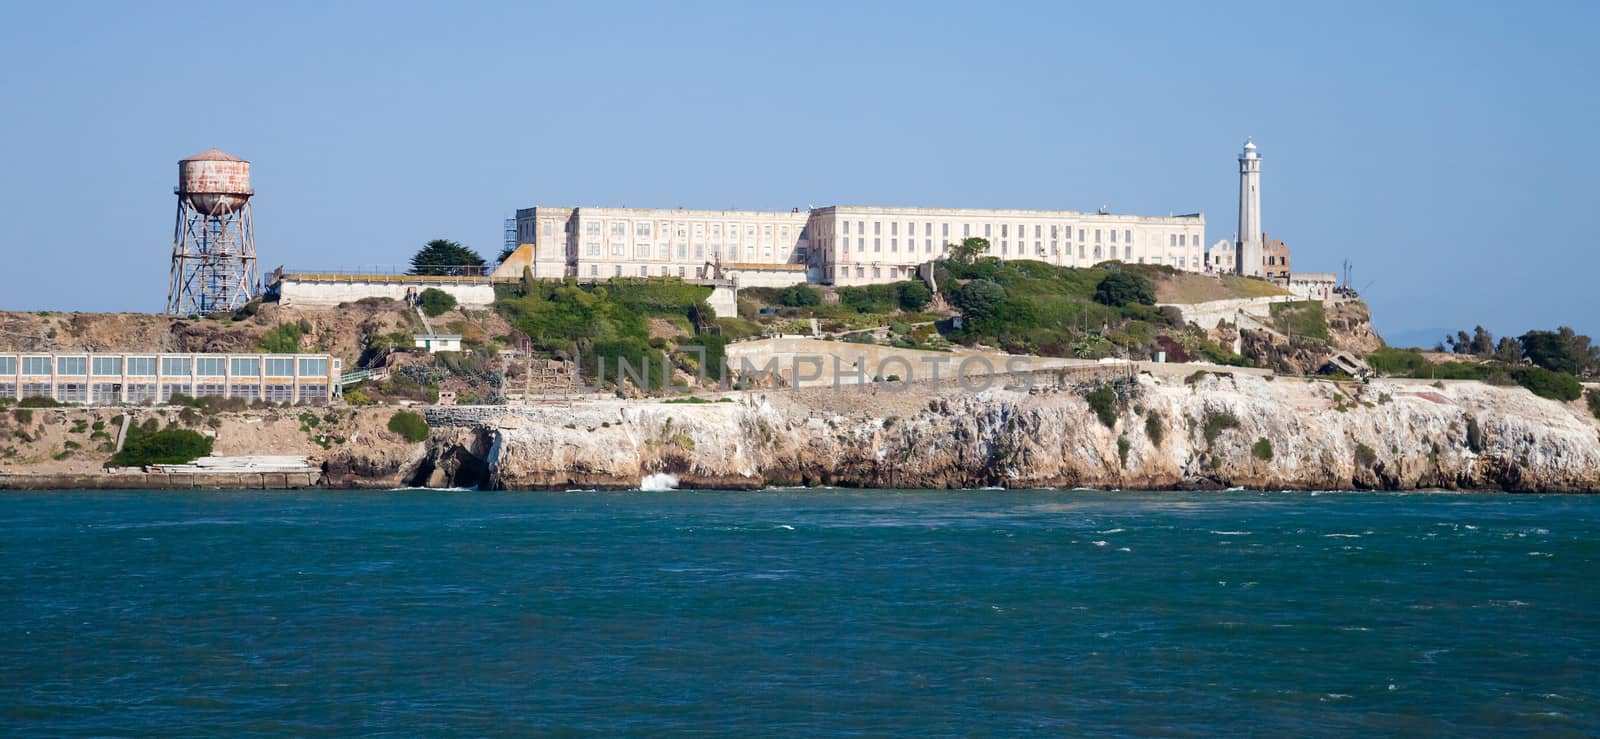 Alcatraz jail in San Francisco by hanusst